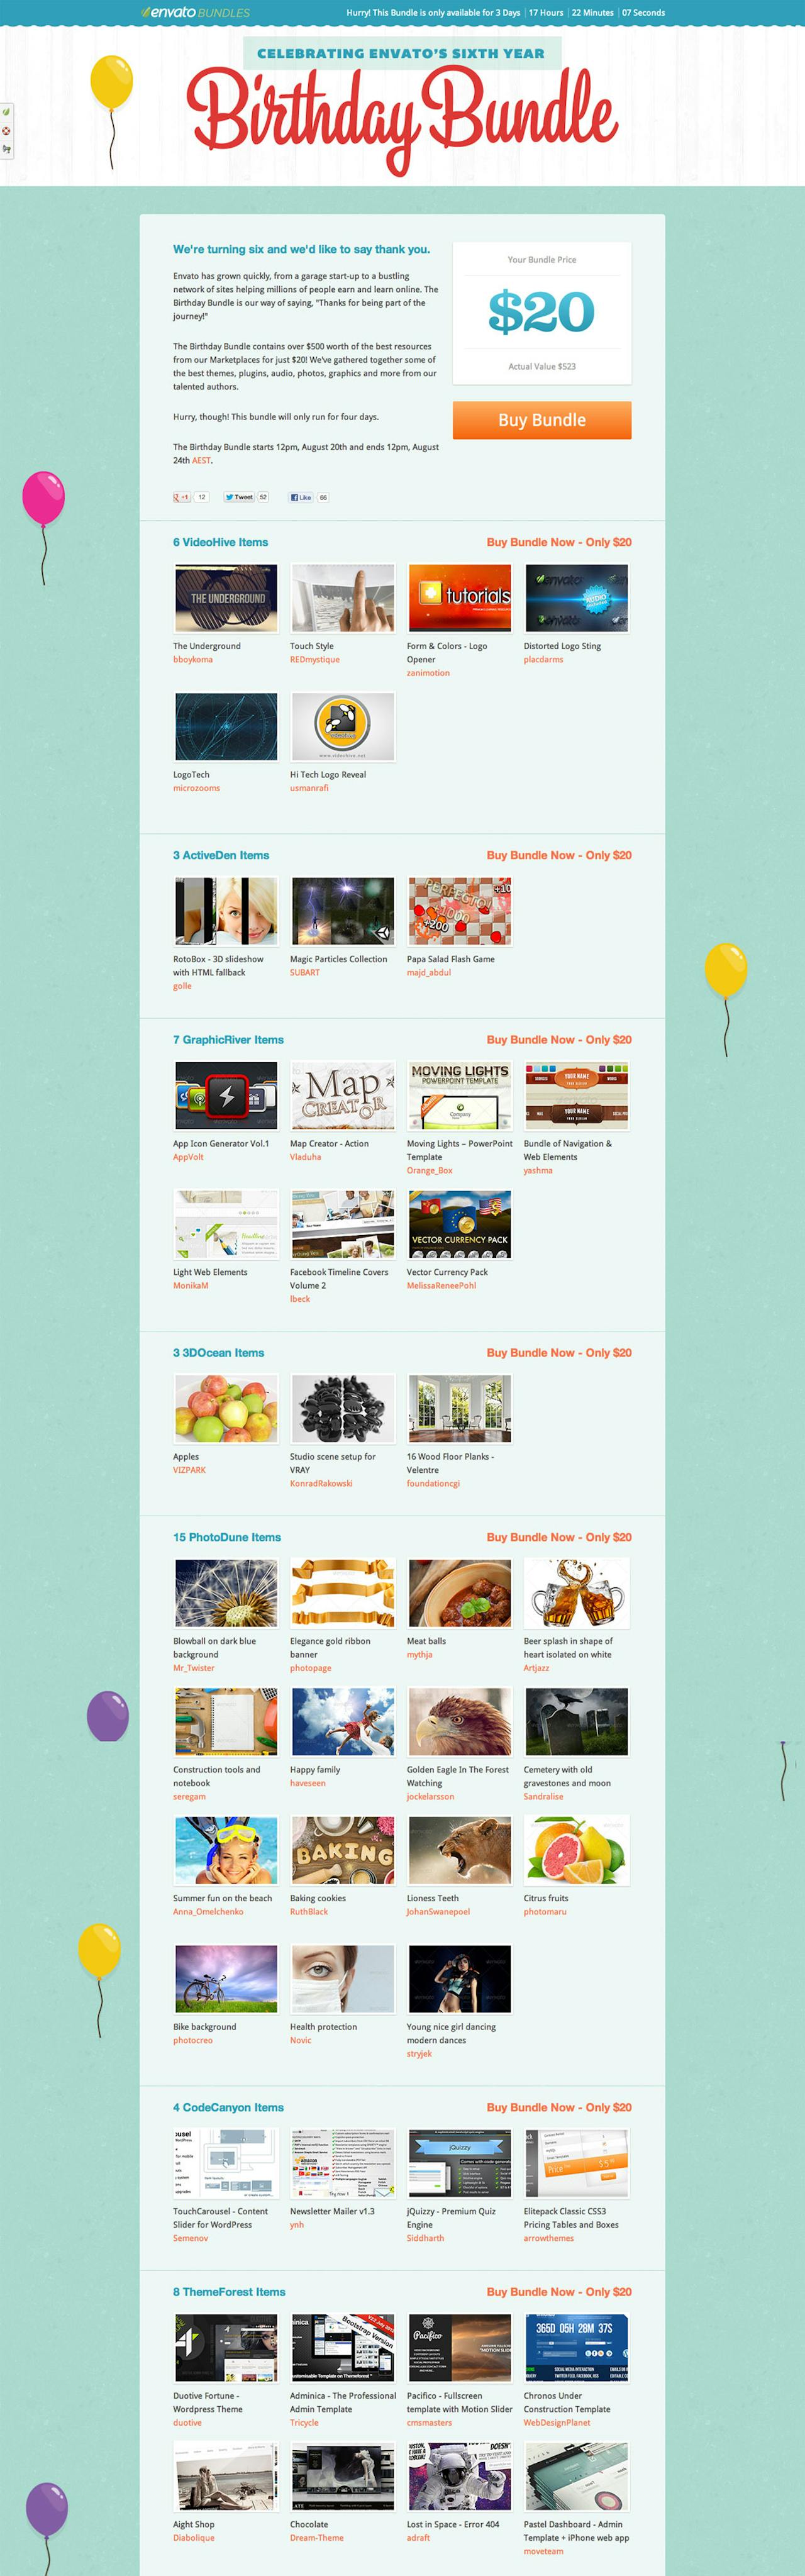 Envato Birthday Bundle 2012 Website Screenshot